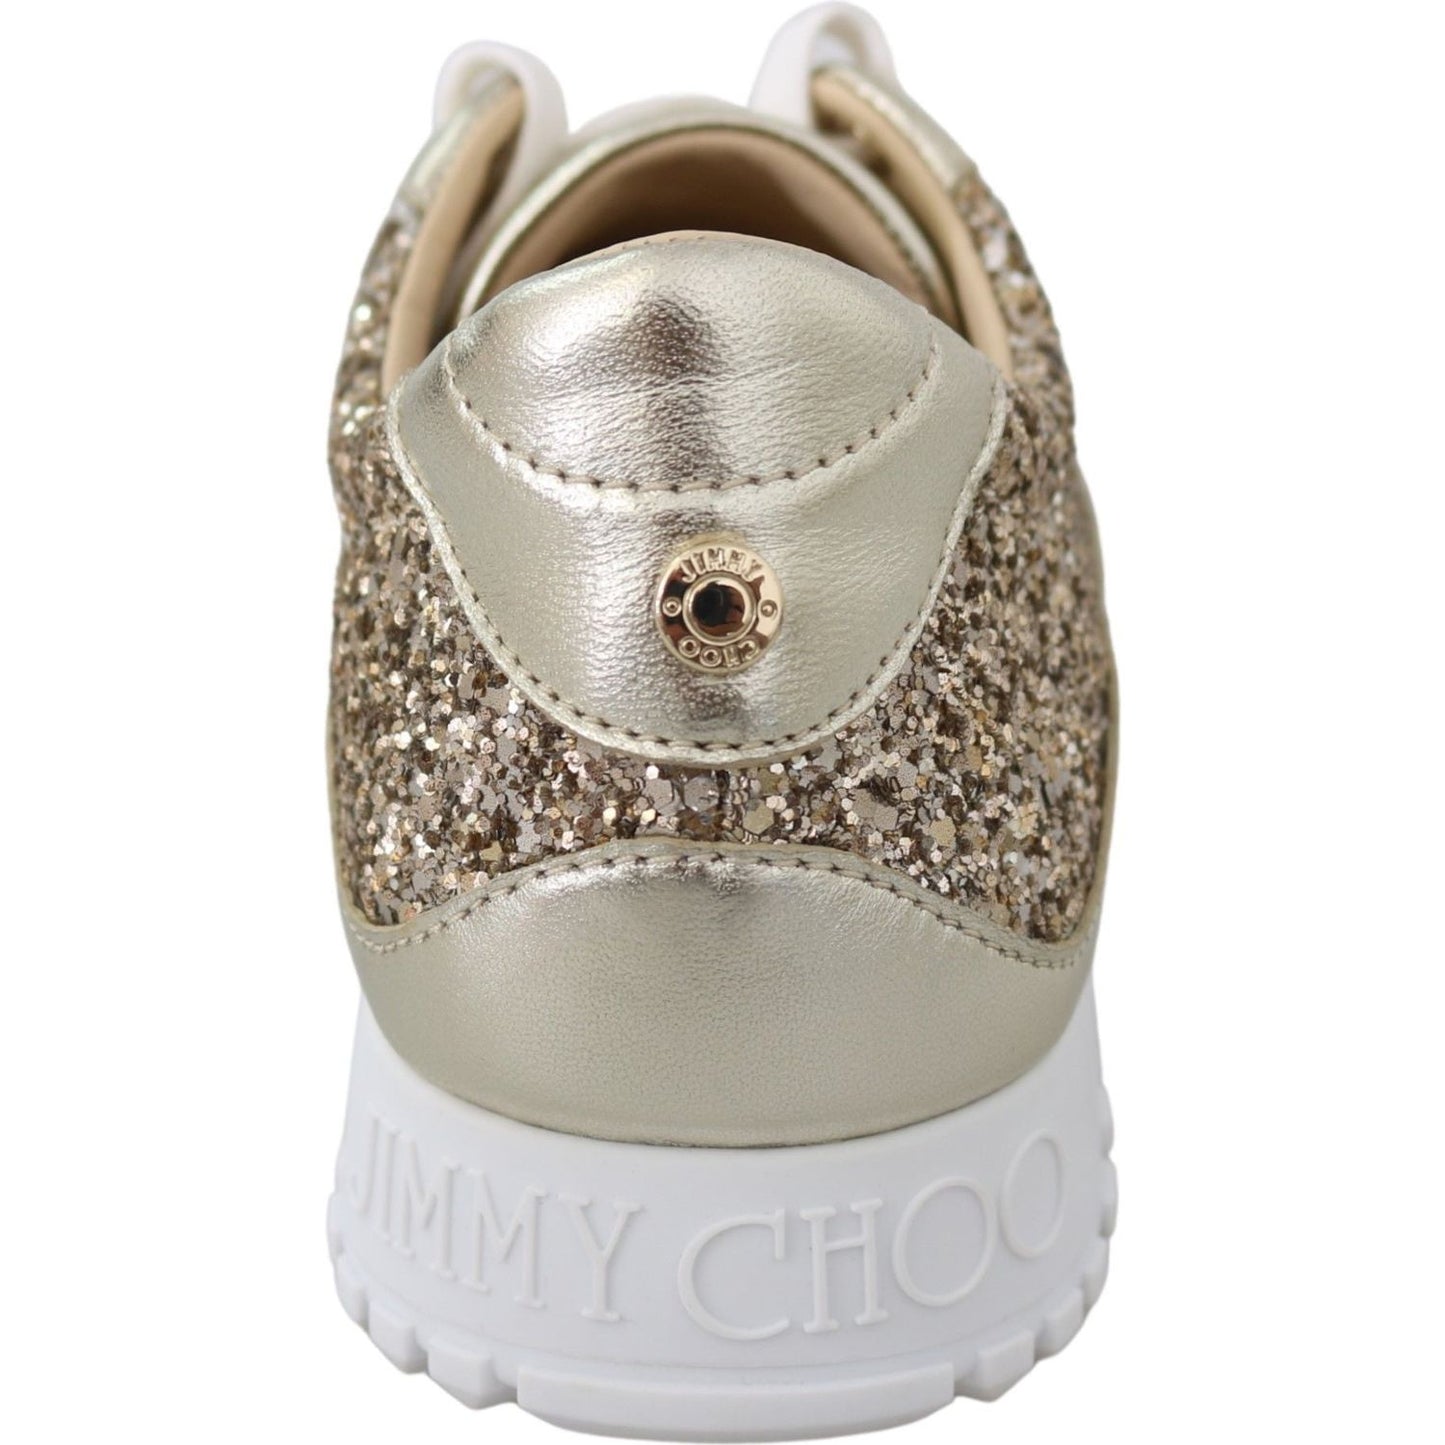 Jimmy ChooAntique Gold Glitter Leather SneakersMcRichard Designer Brands£439.00